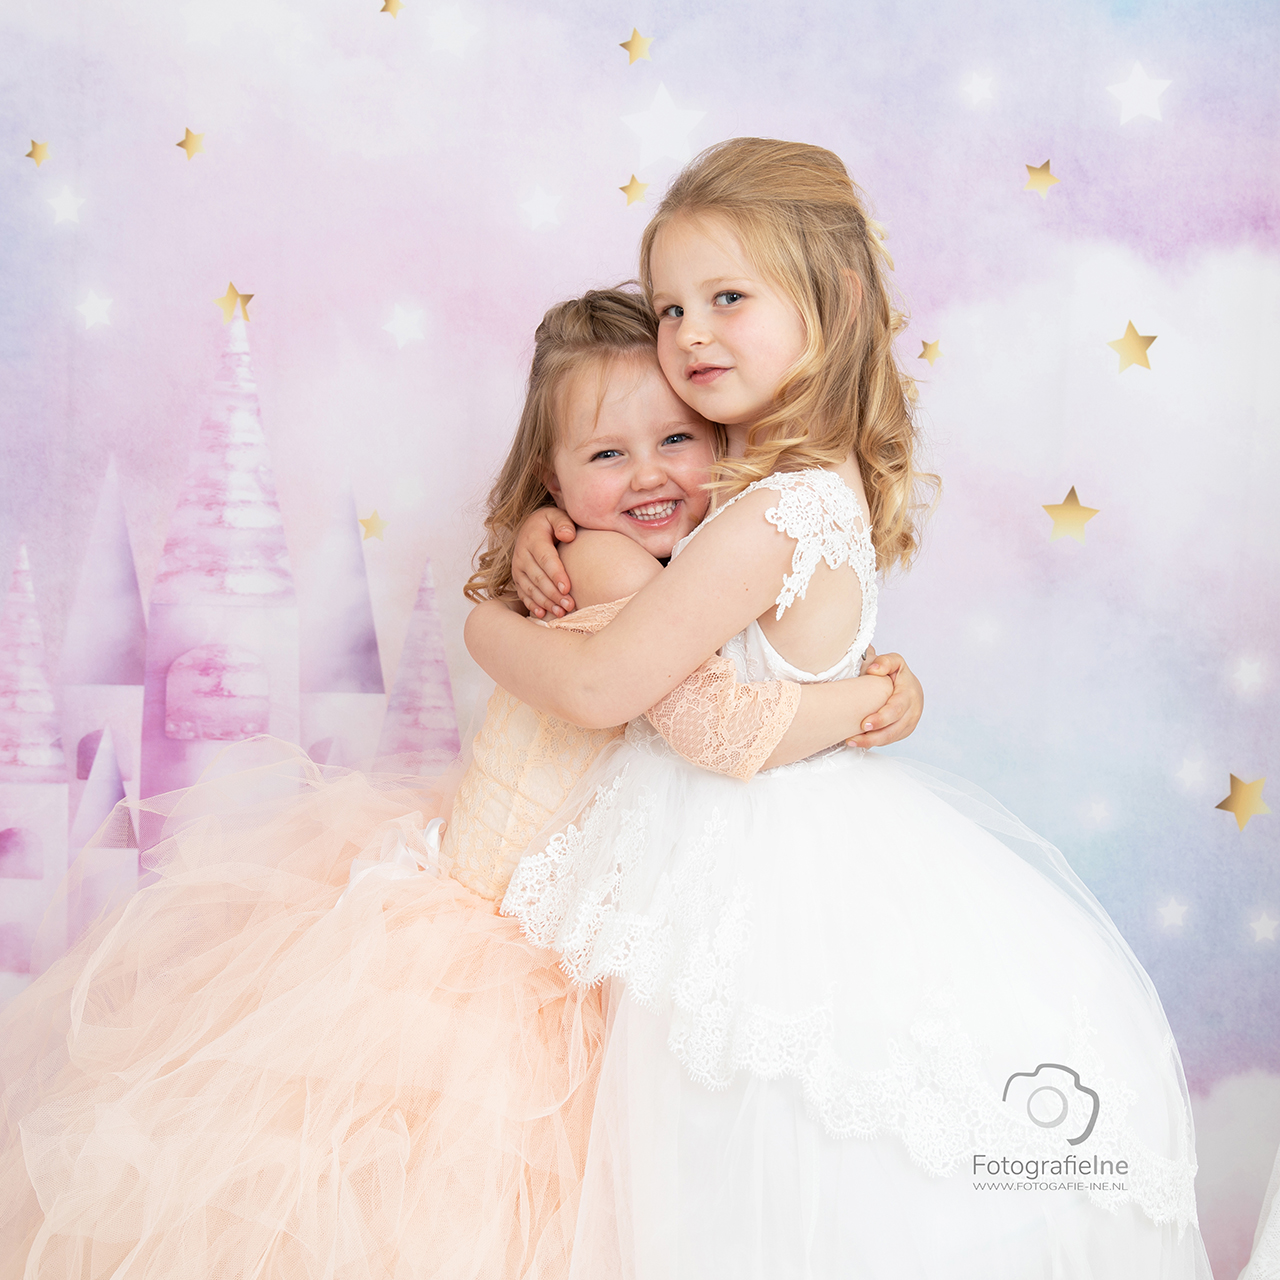 Fotografie Ine Prinsessen fotoshoot zusjes